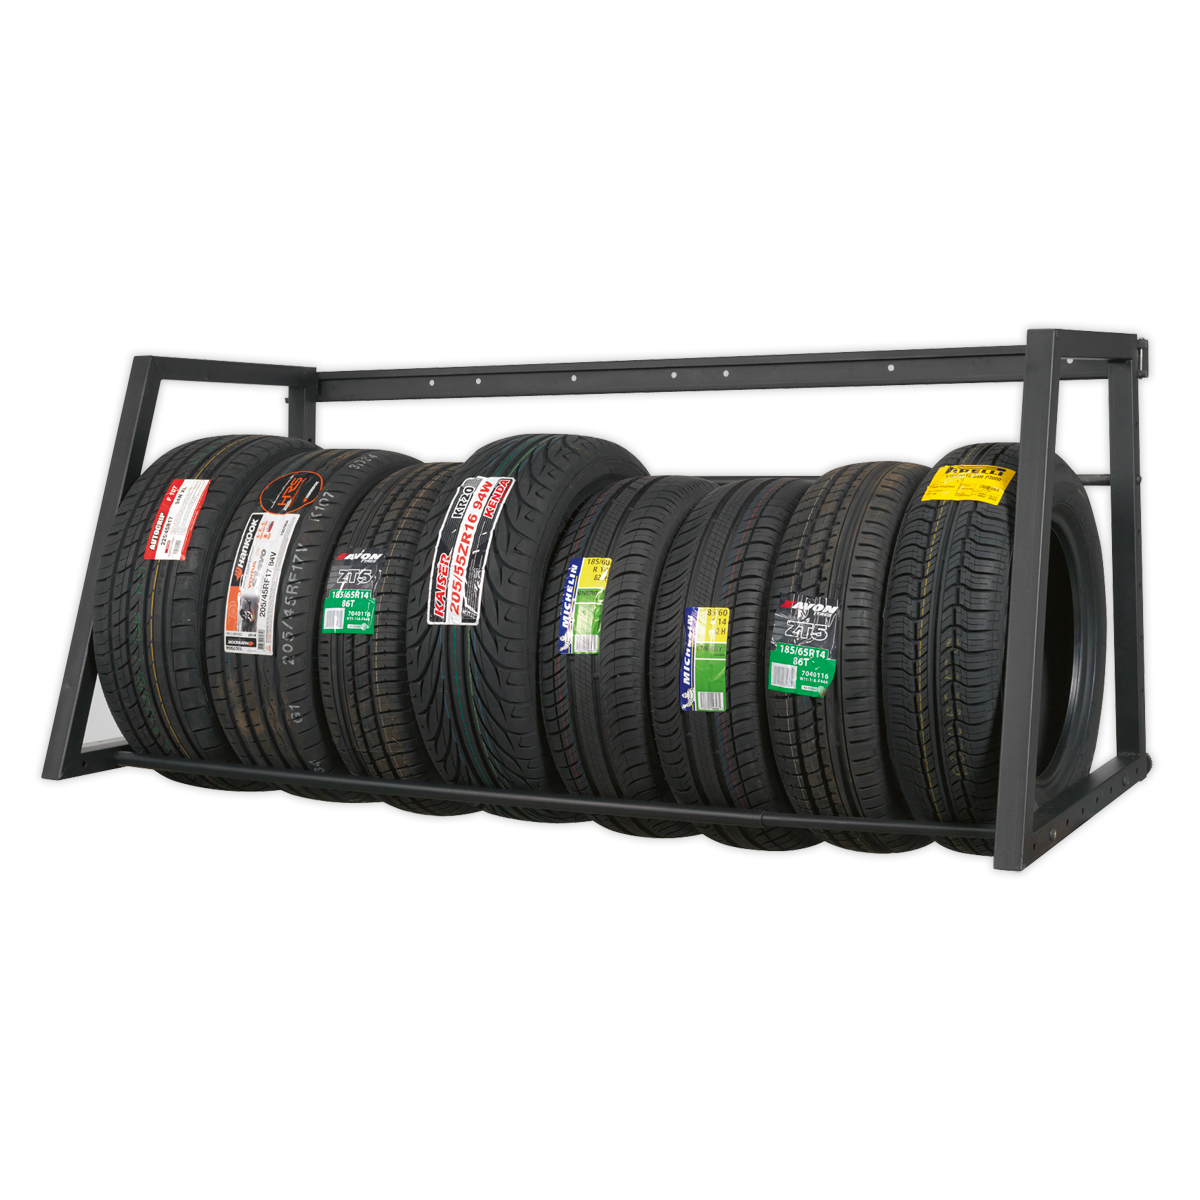 Extending Tyre Rack Wall or Floor Mounting